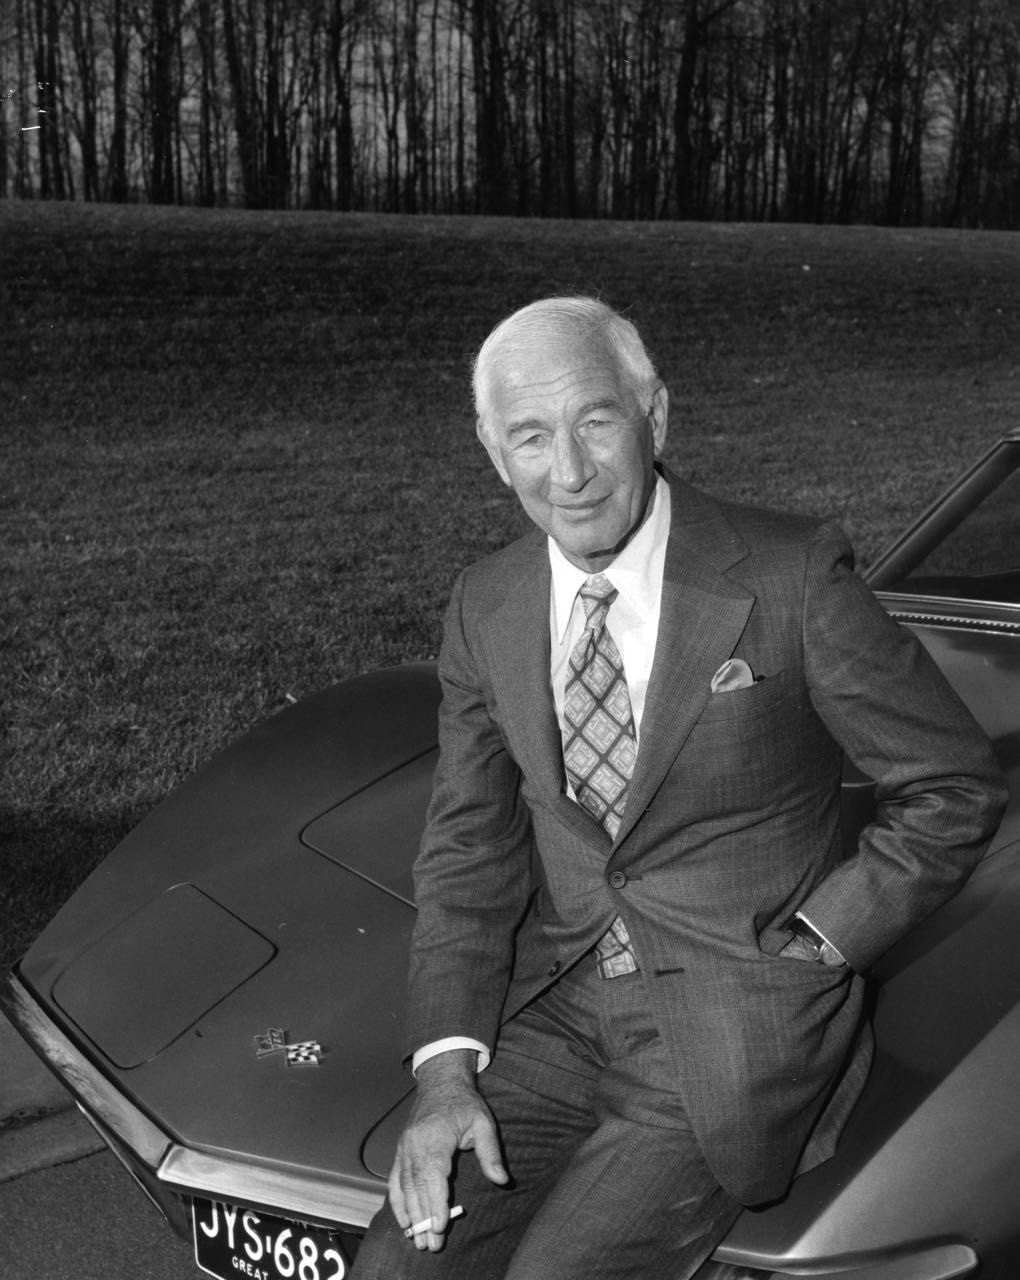 Zora Arkus-Duntov, "The Legend Behind Corvette." (Photo courtesy of GM Media.)